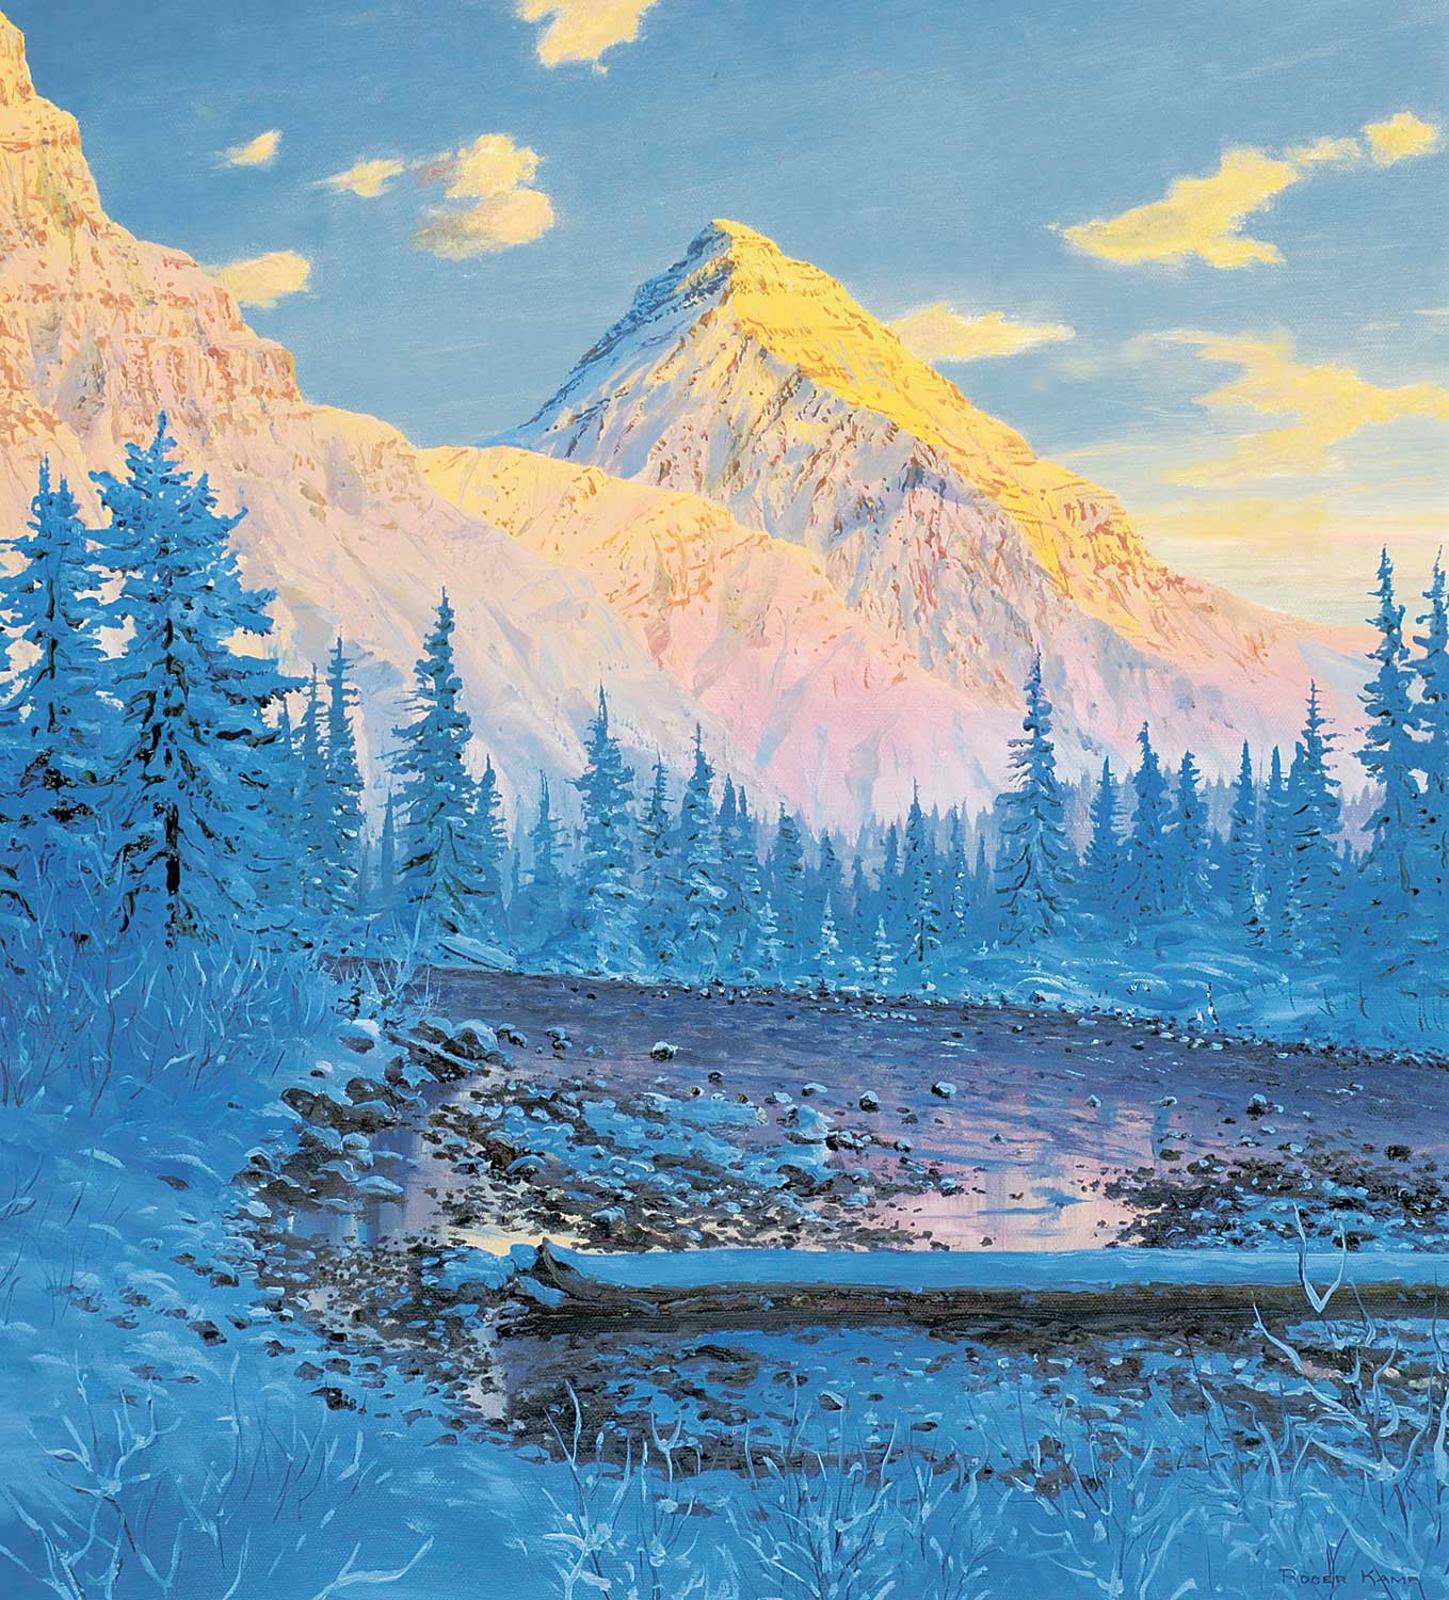 Roger Kamp (1954) - Winter Sunset Glows on Mount Hector